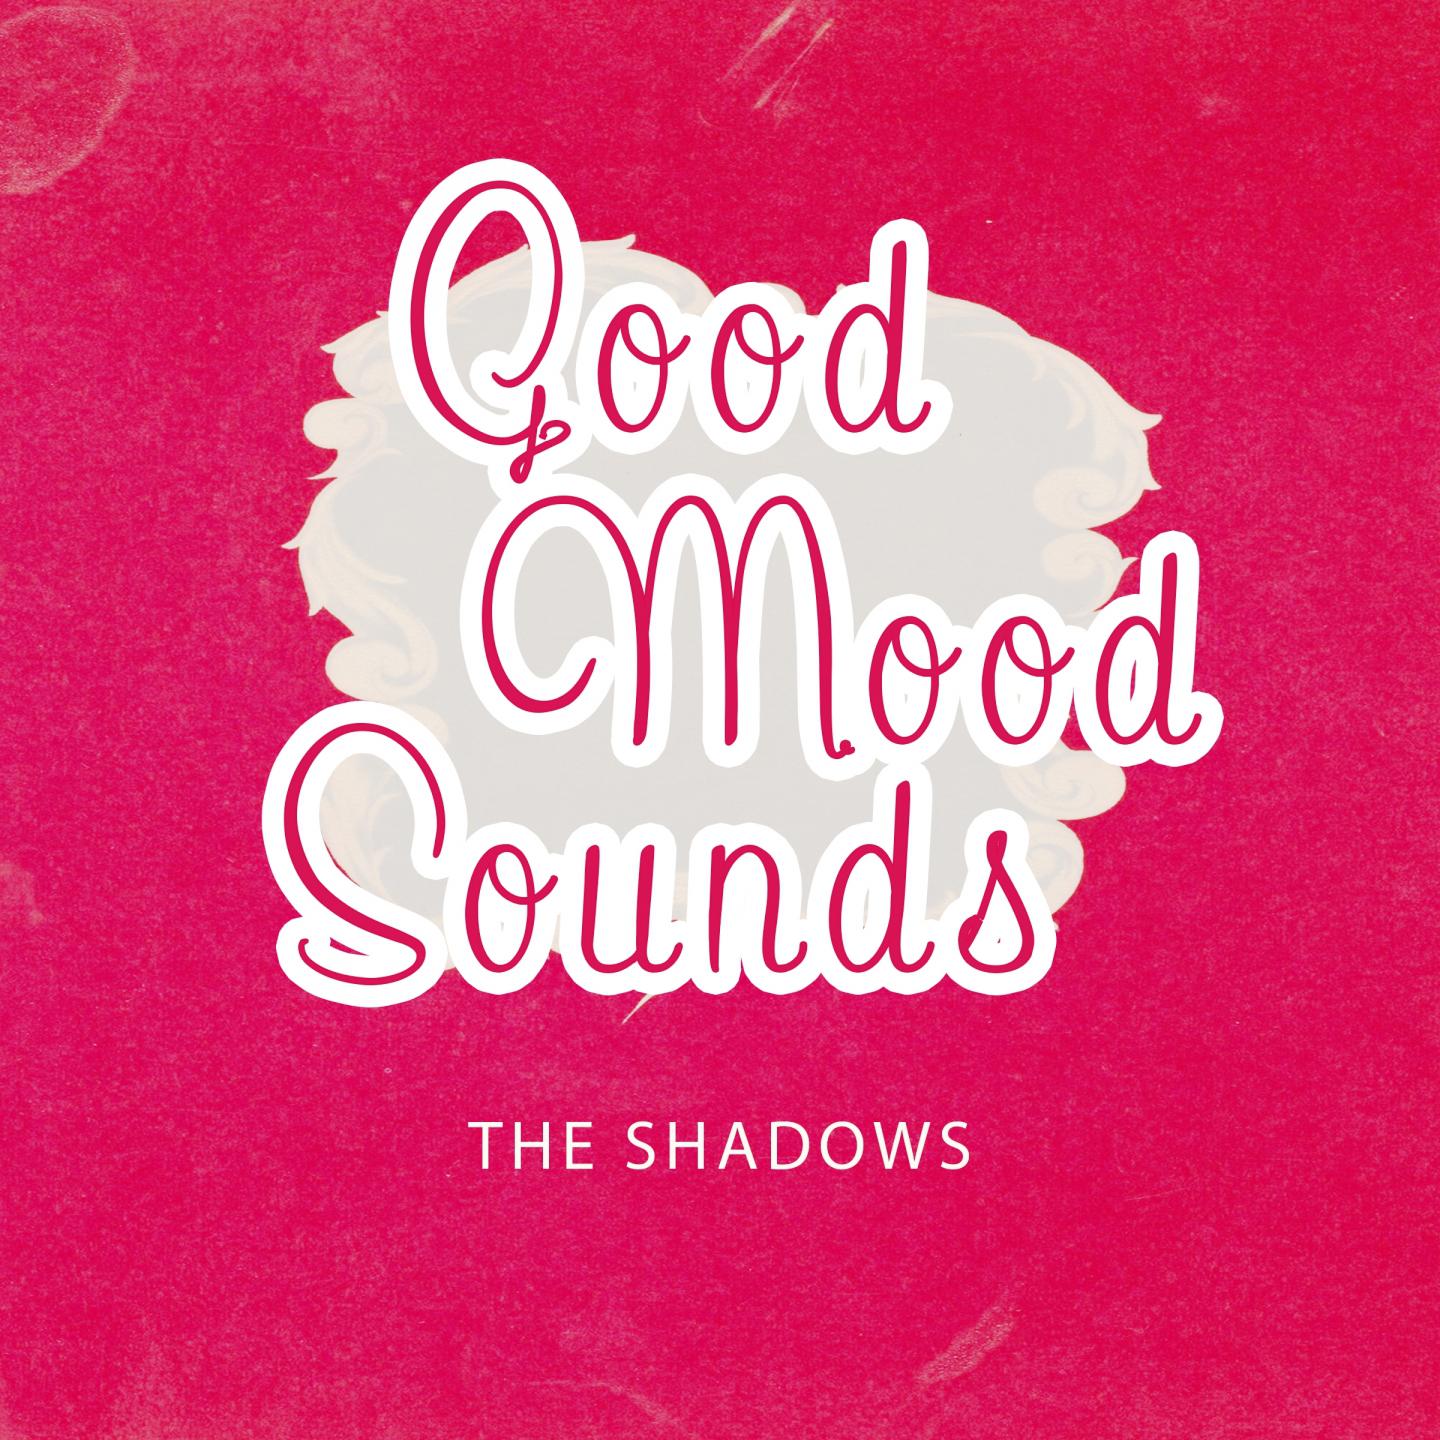 Good Mood Sounds